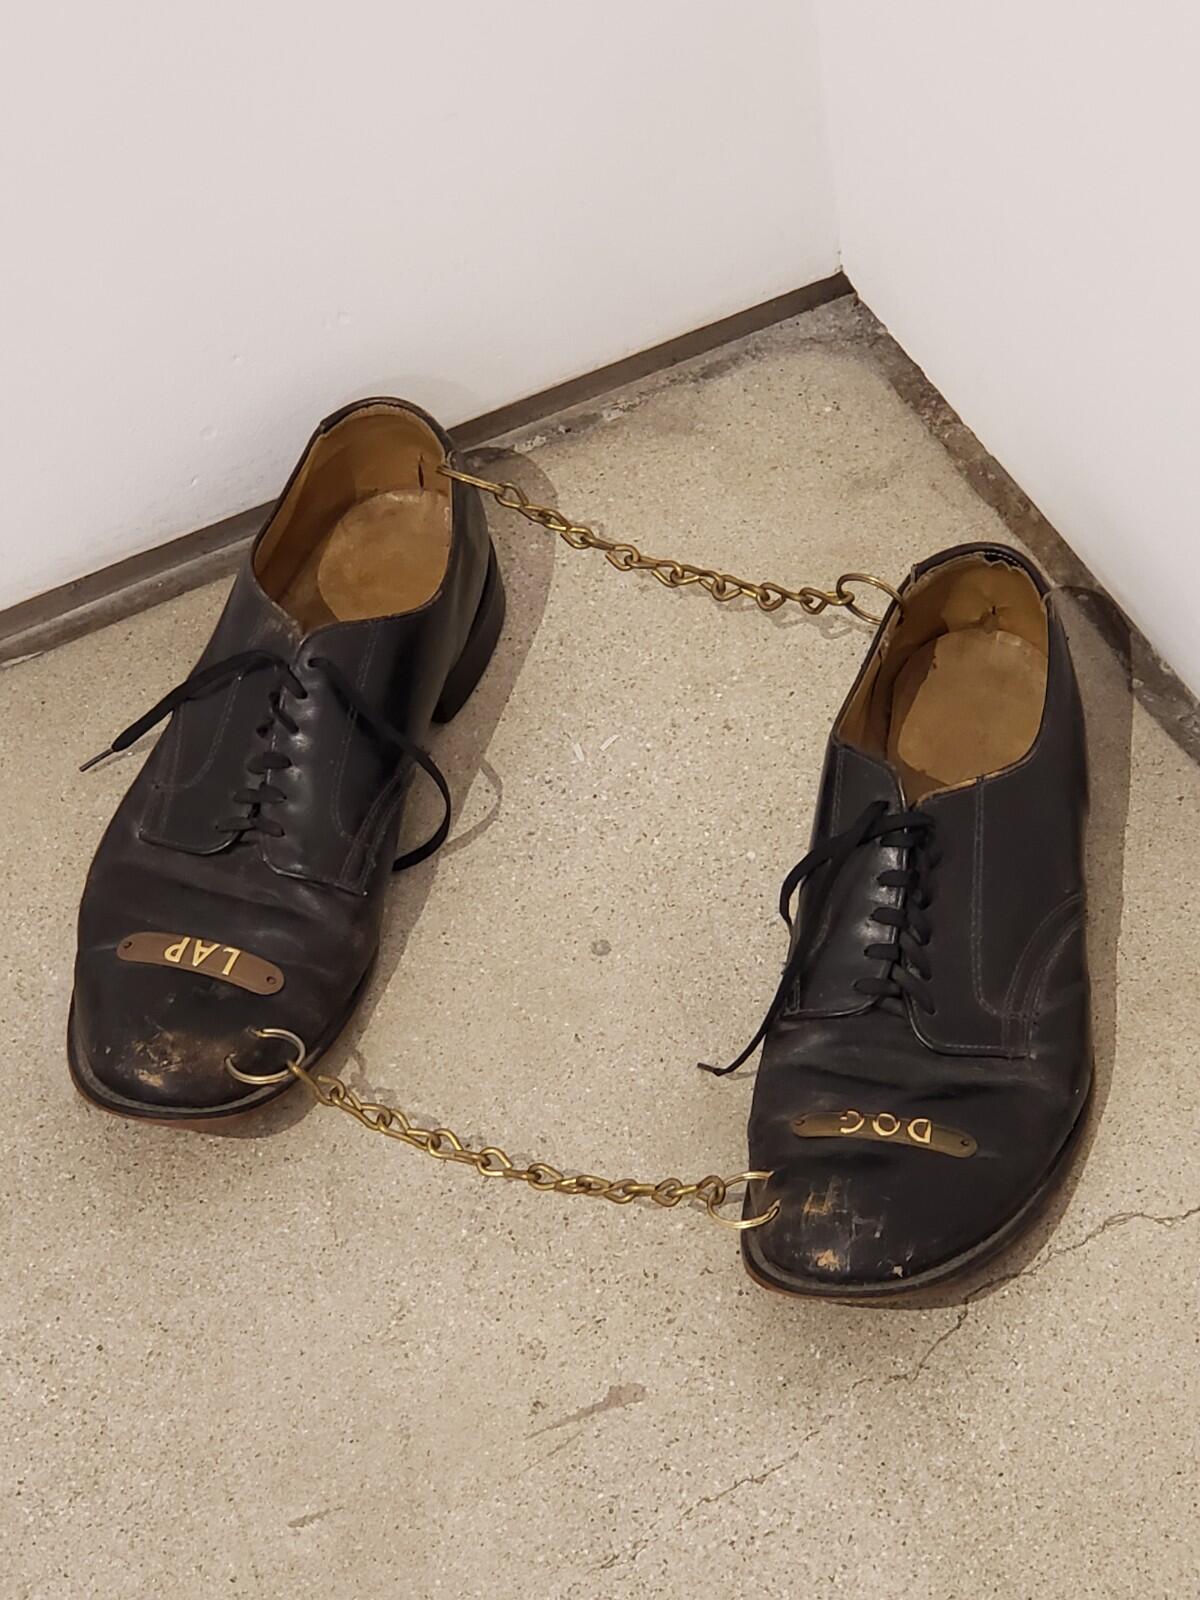 Nayland Blake, "Lap Dog," 1987; leather shoes, brass plates, chain